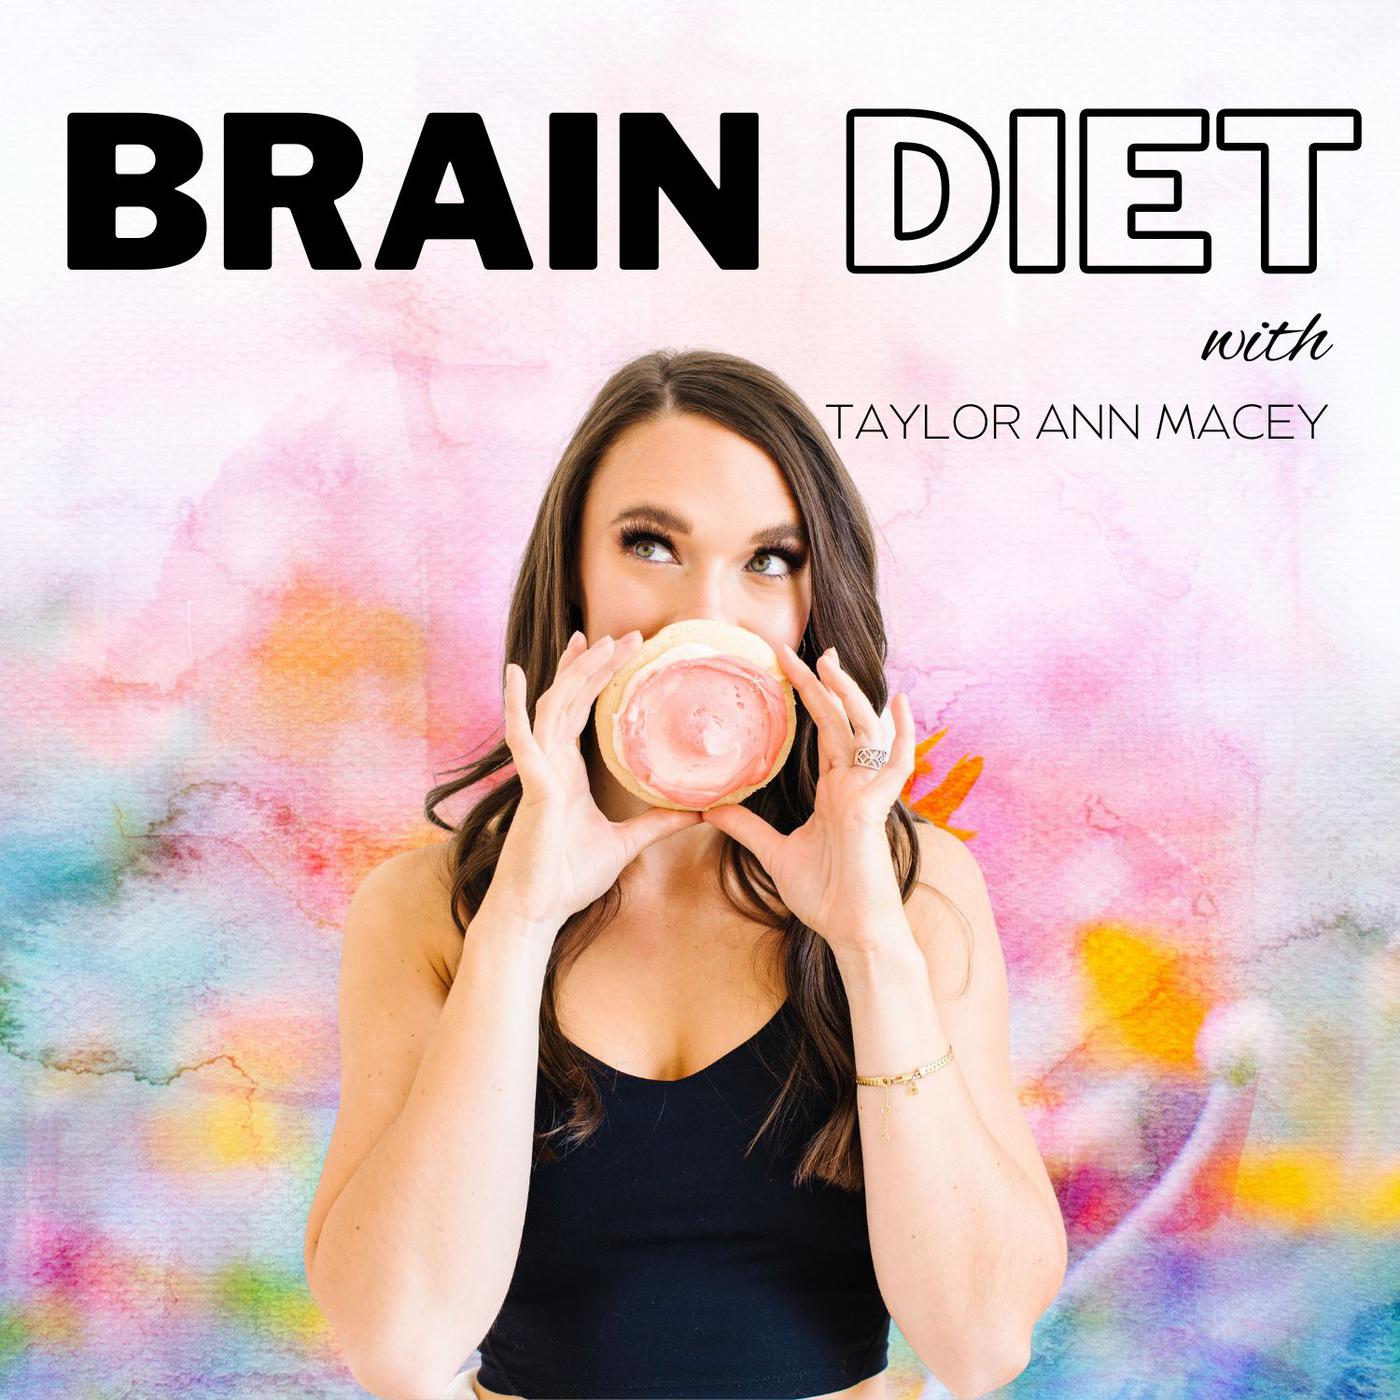 Brain diet with taylor ann macy.